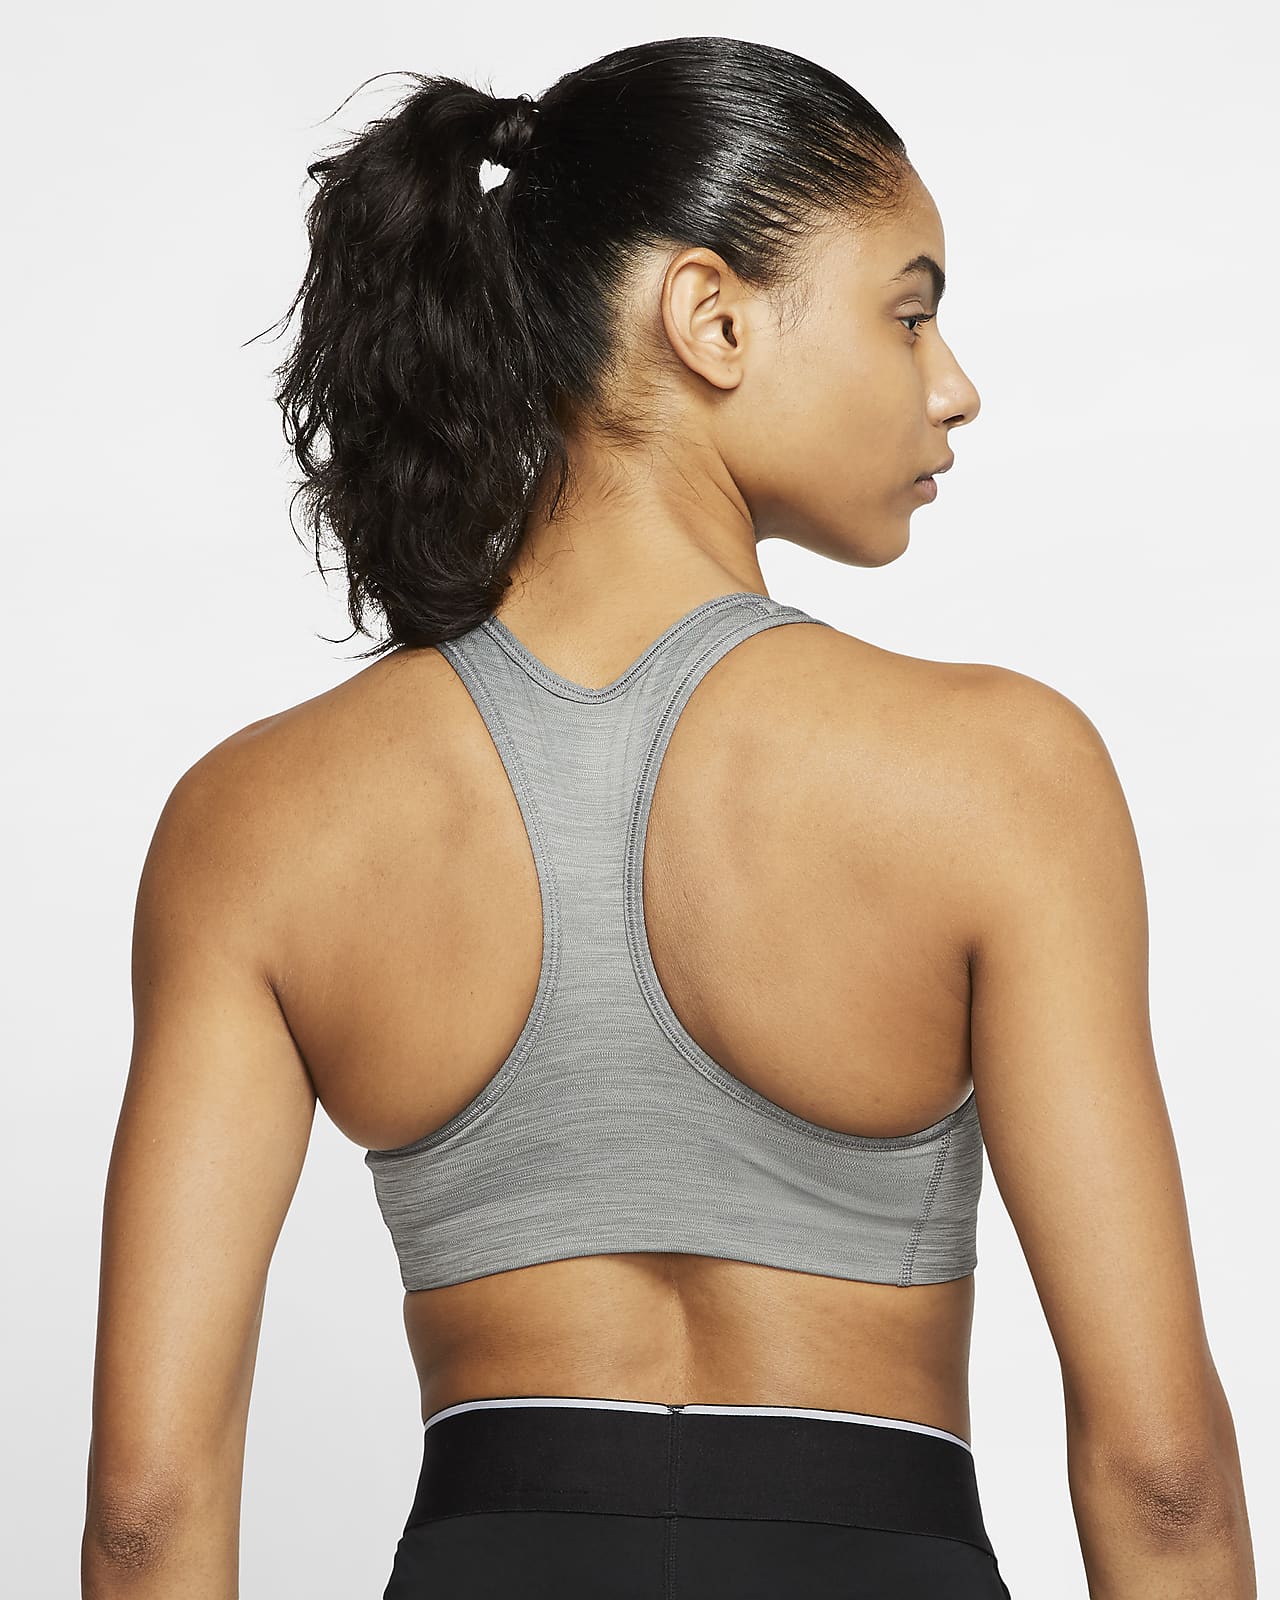 Nike Swoosh Women's Medium-Support Non-Padded Sports Bra.